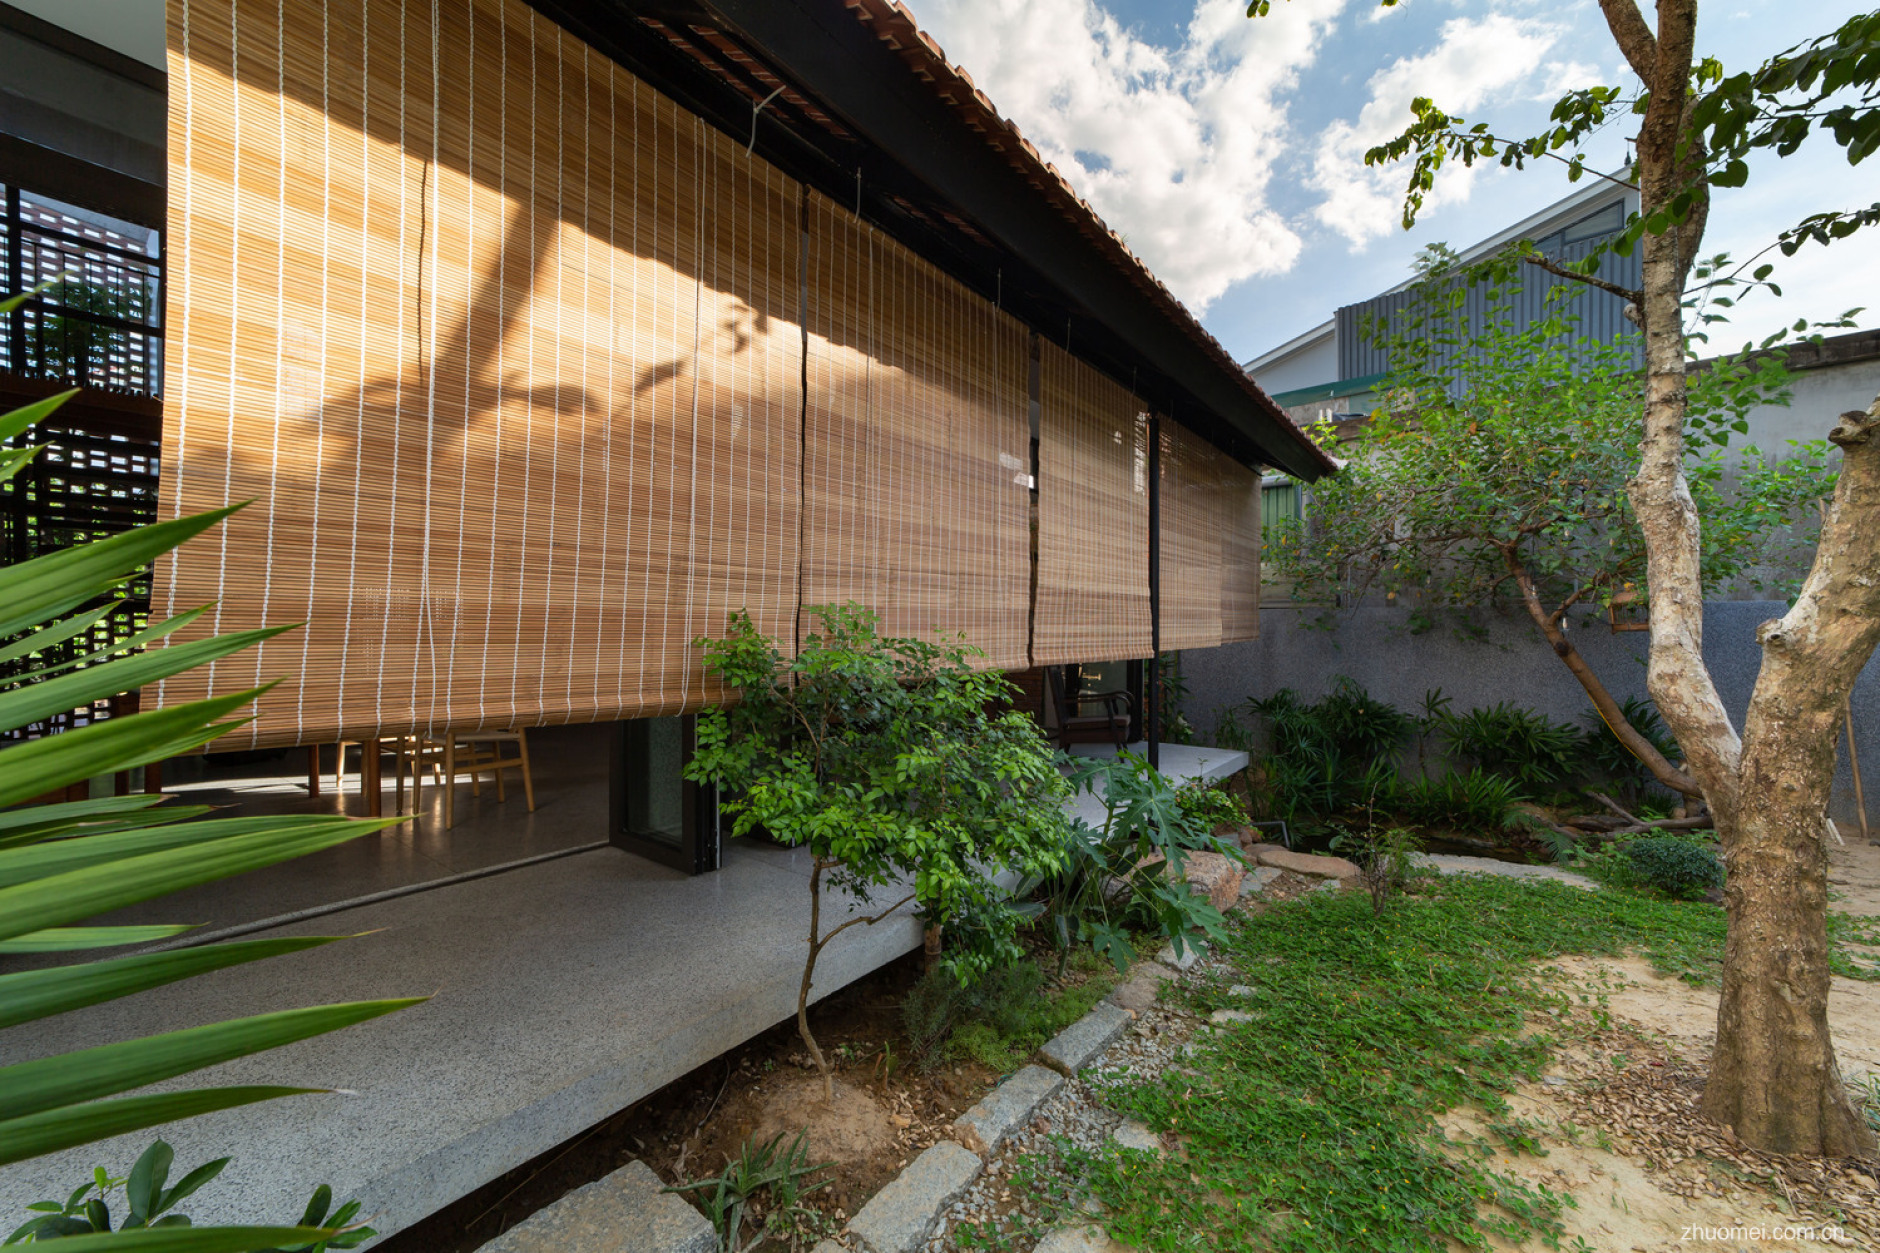 Dom Architect Studio丨The Tiamo House丨越南-55